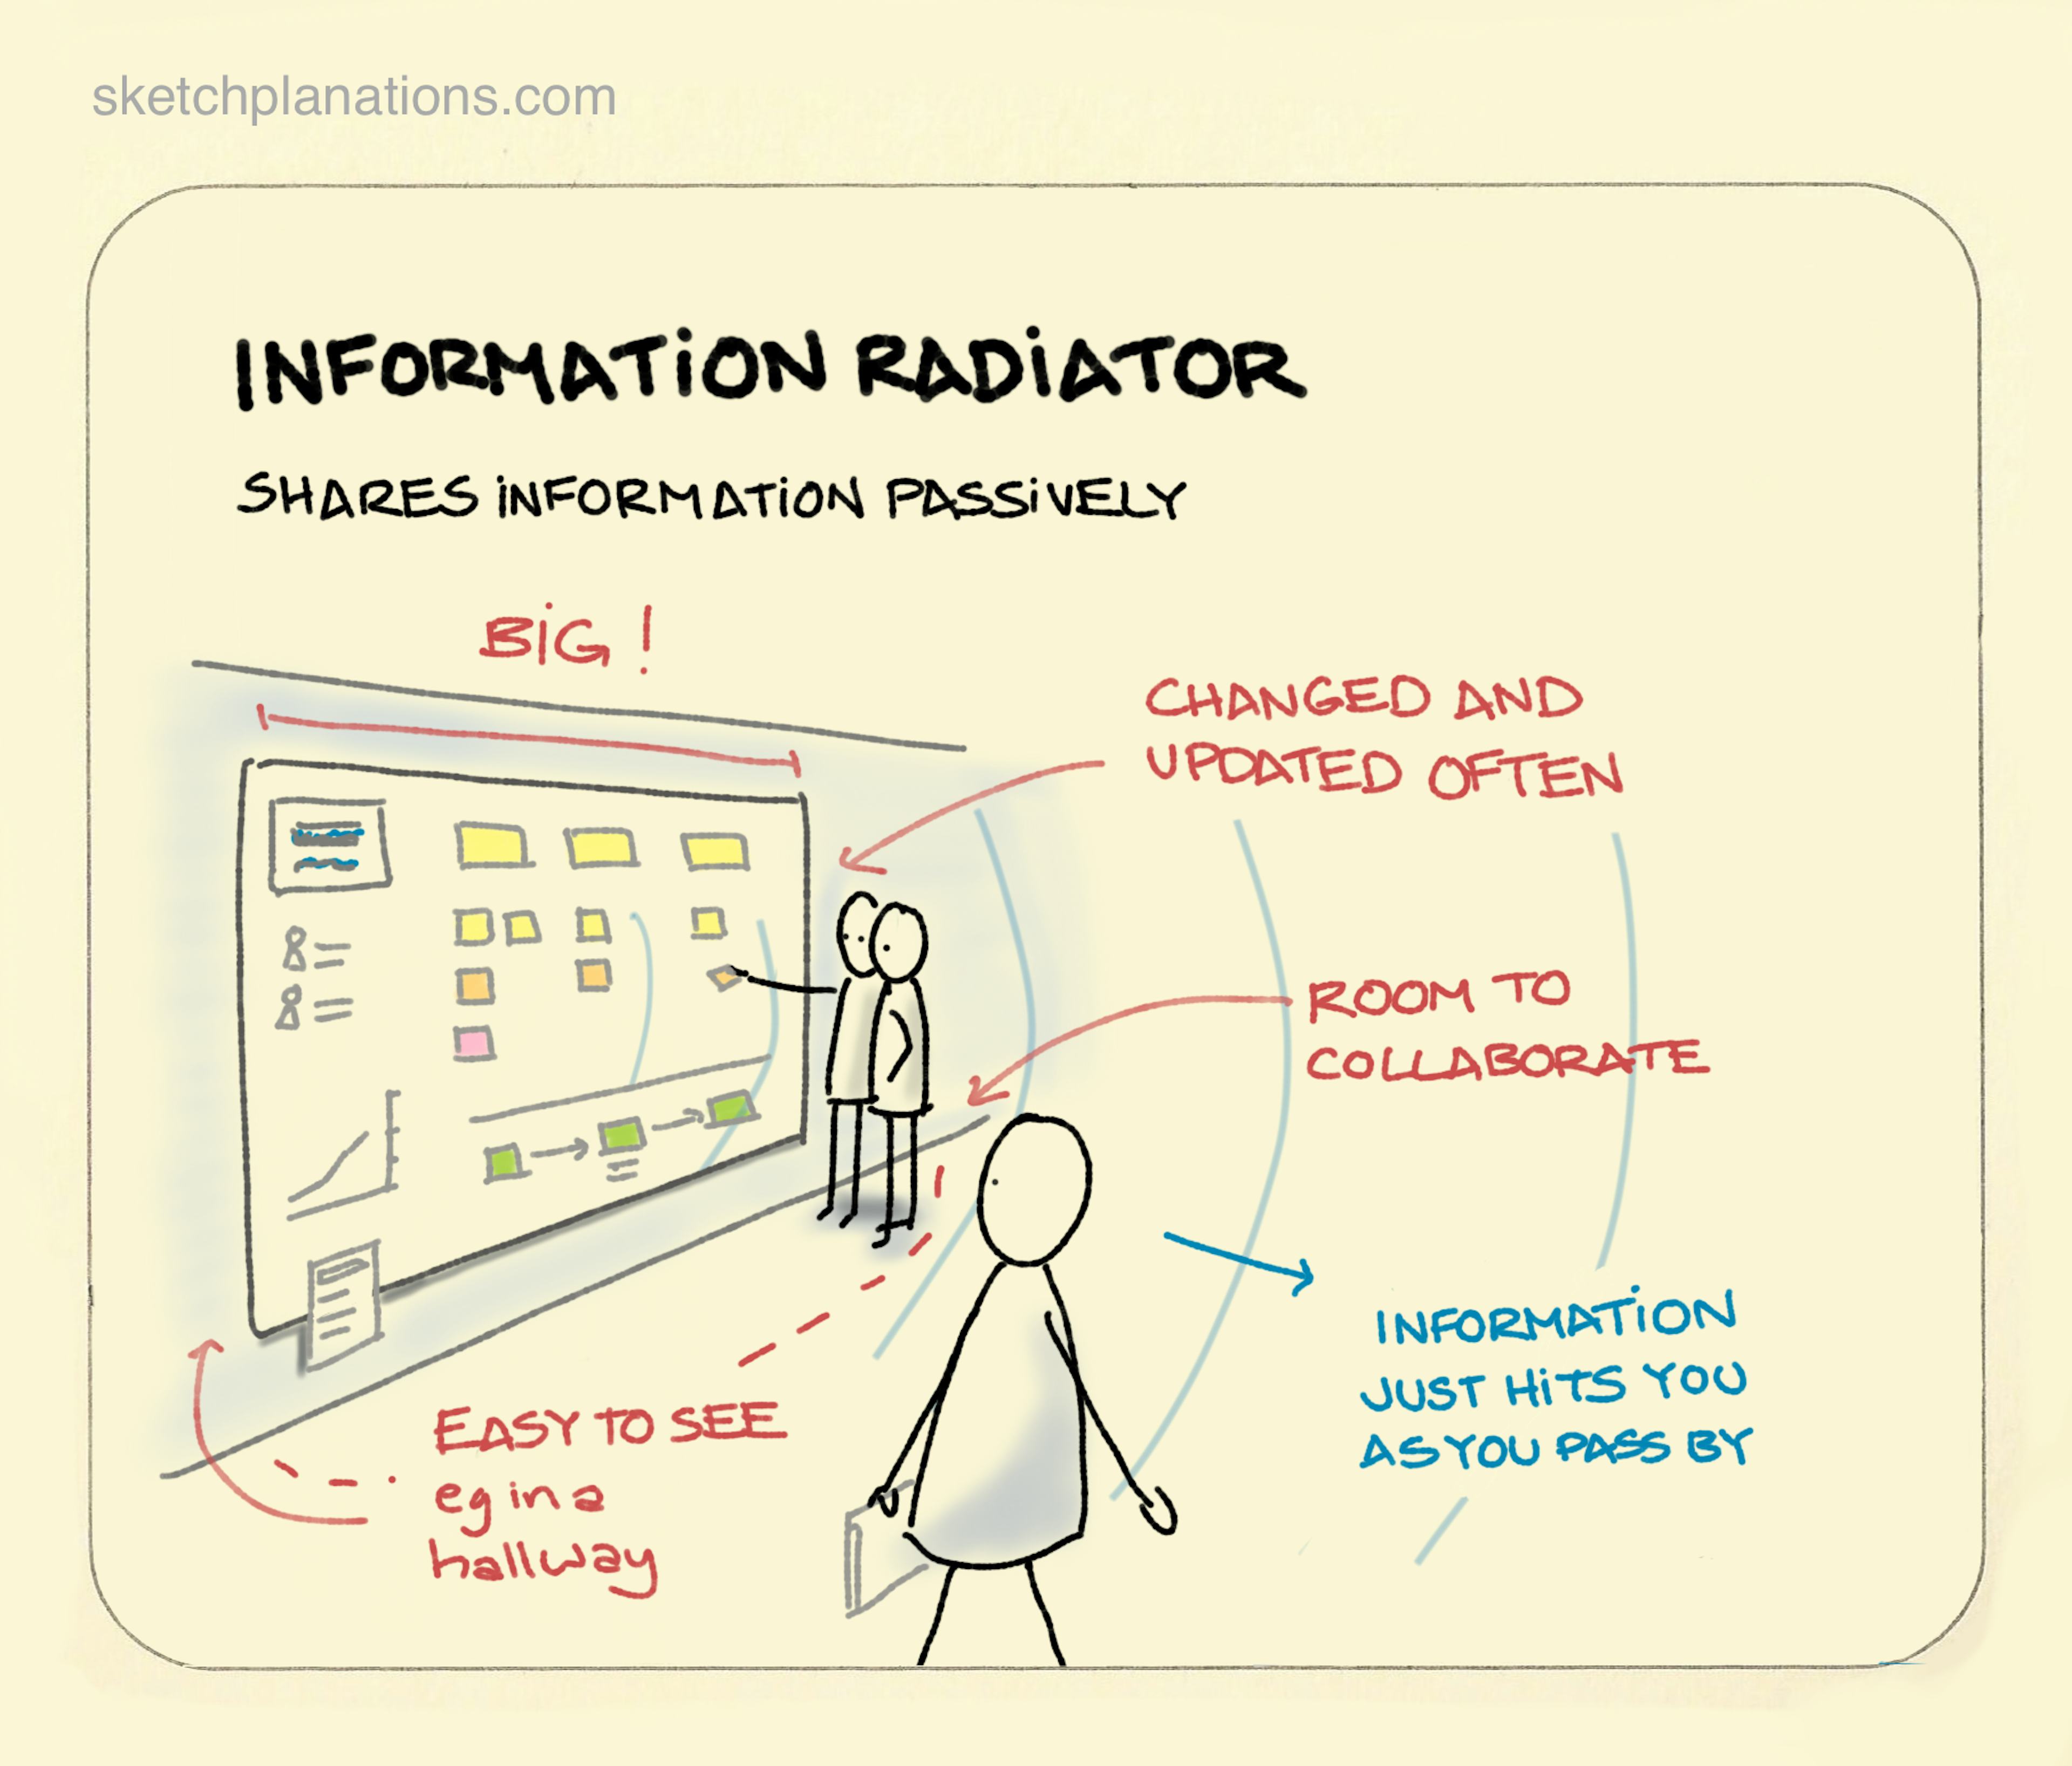 Information radiator - Sketchplanations